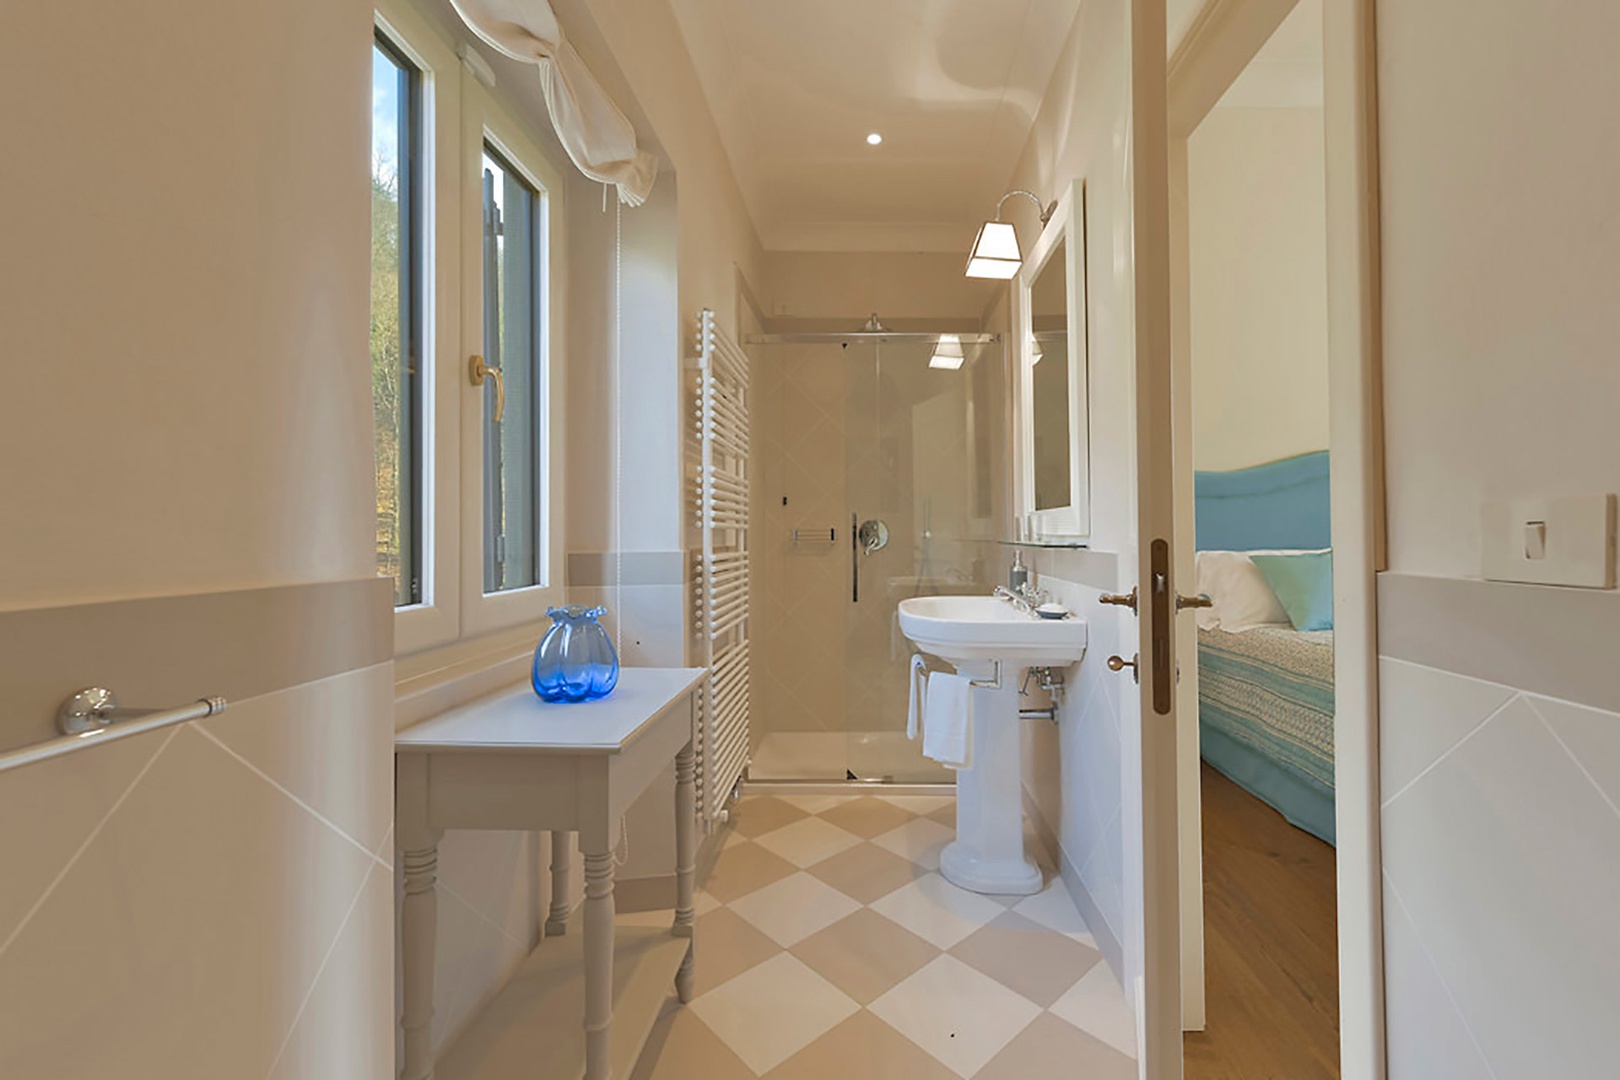 Bathroom 5 features heated towel racks and shower.